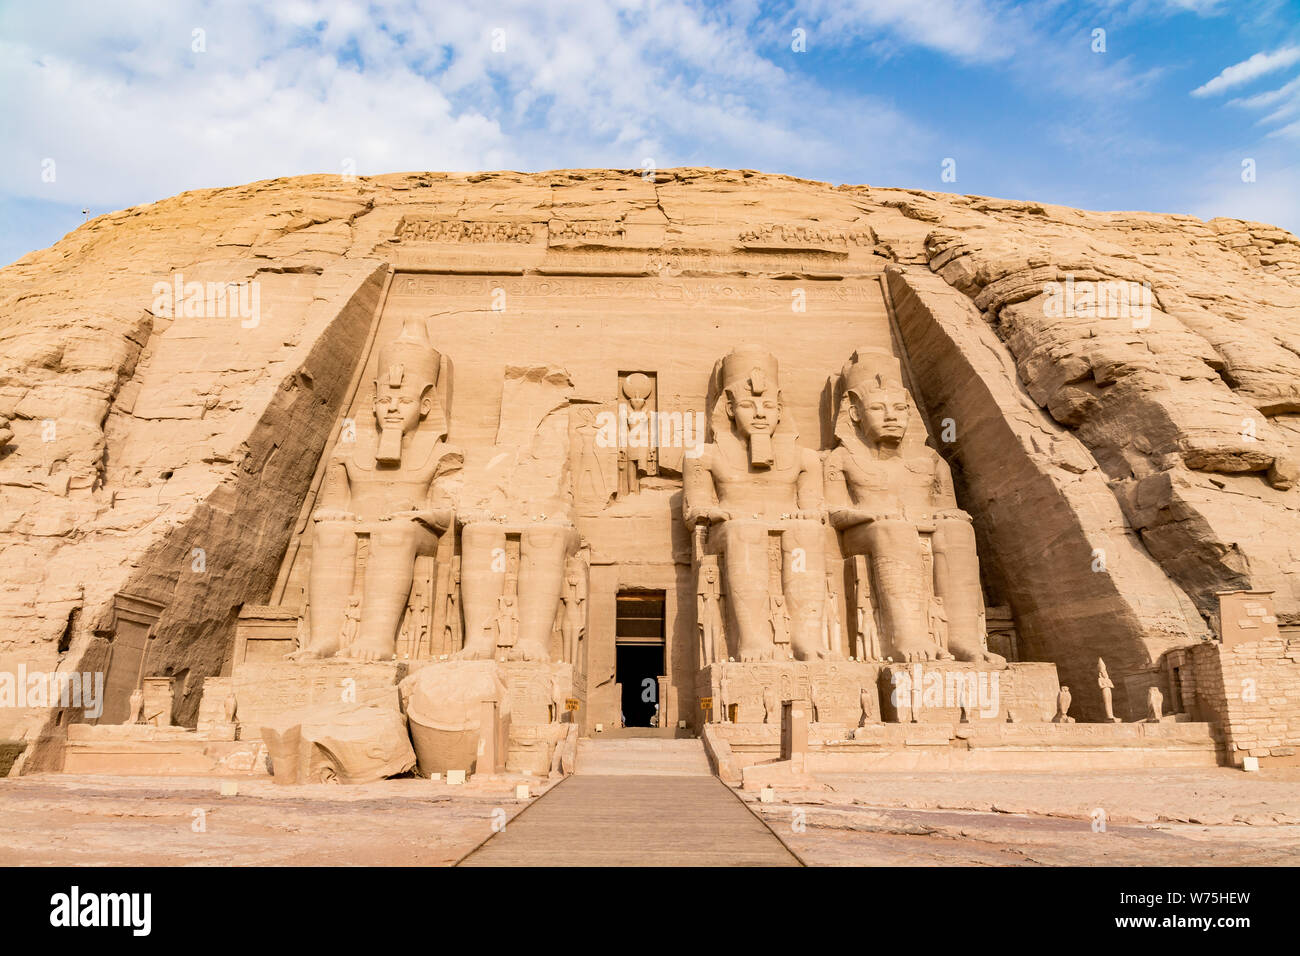 Abu Simbel Tempel, Wundervolle Sehenswürdigkeit von Pharao Ramses der Große gebaut, Ägypten Stockfoto